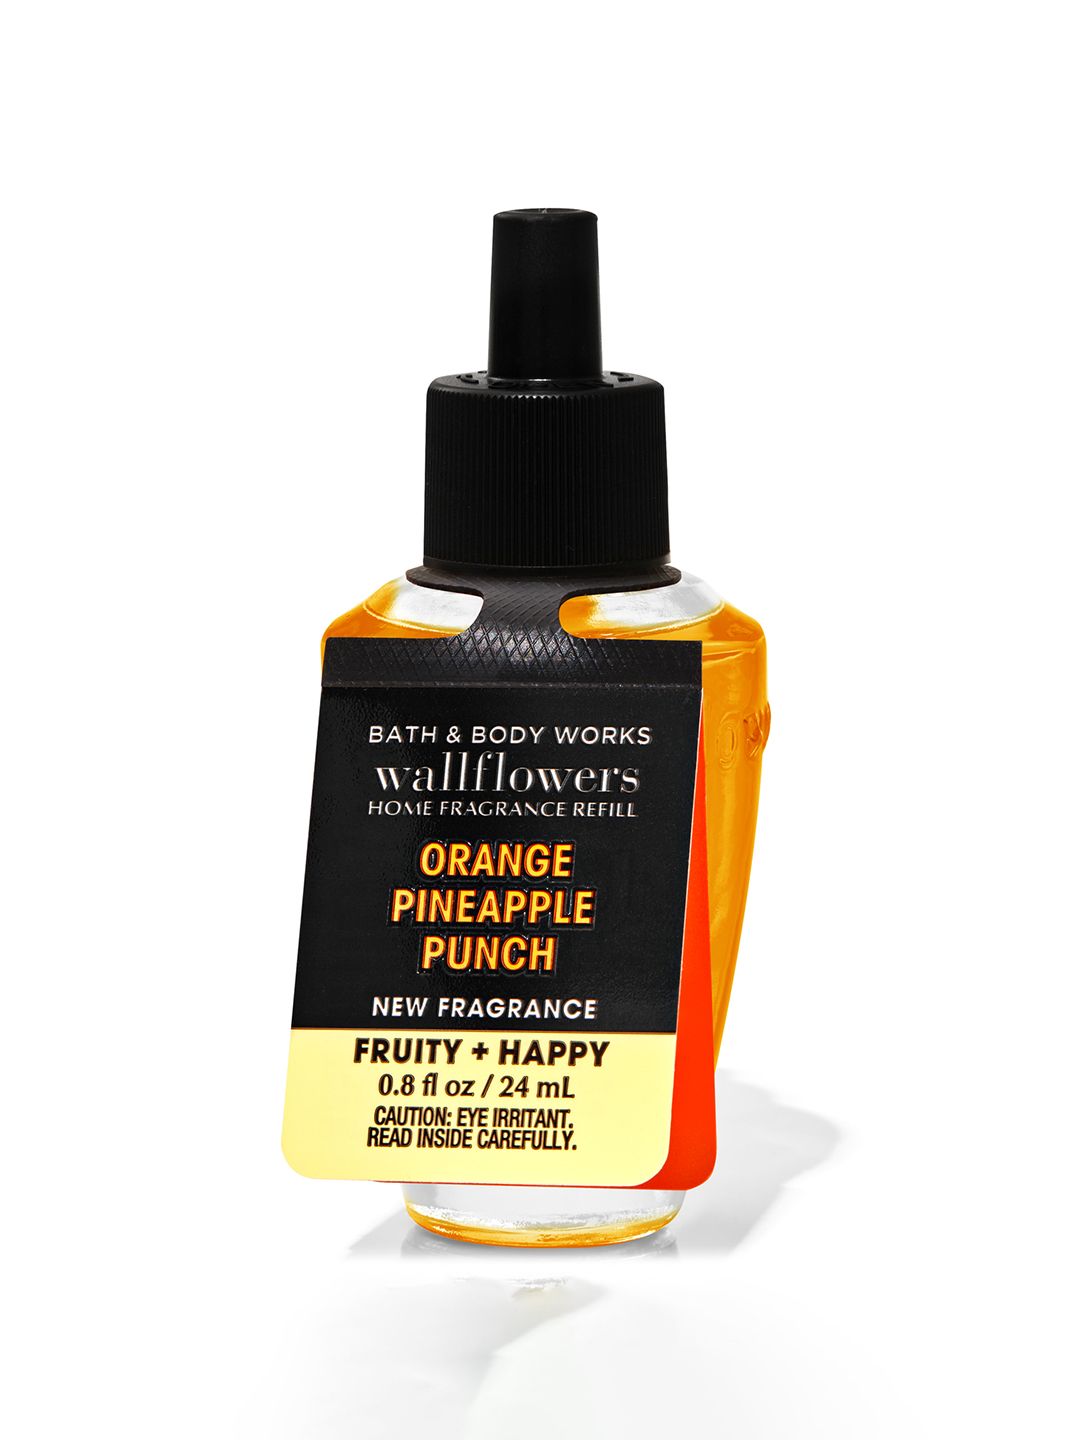 Bath & Body Works Orange Pineapple Punch Wallflowers Home Fragrance Refill - 24 ml Price in India